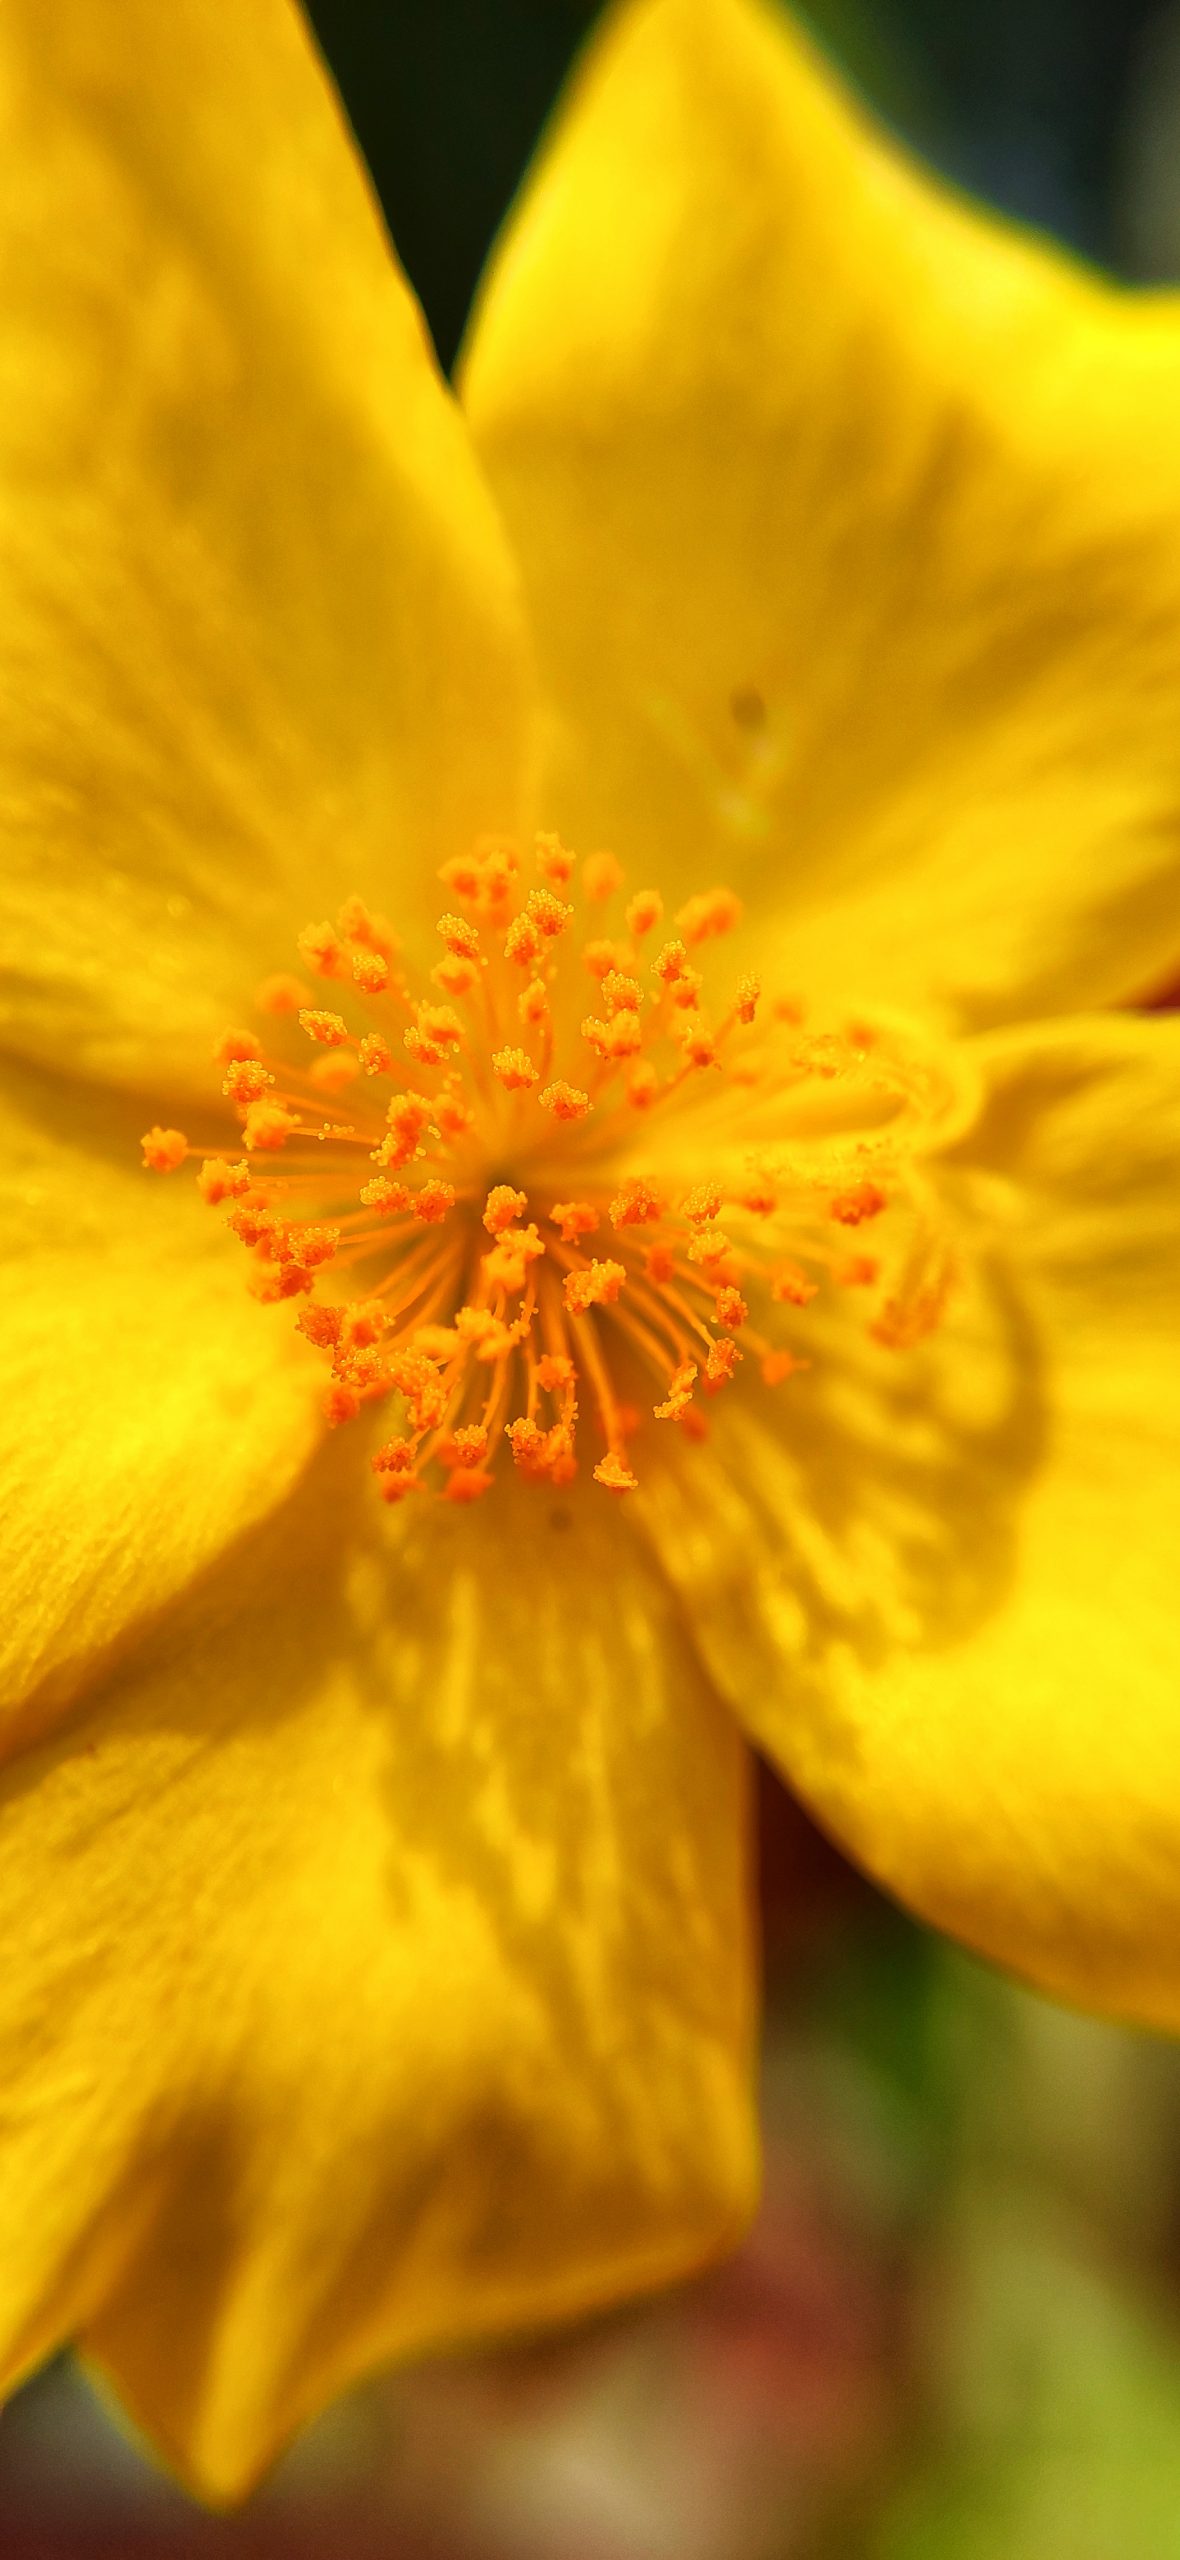 Yellow pollen grains on a flower